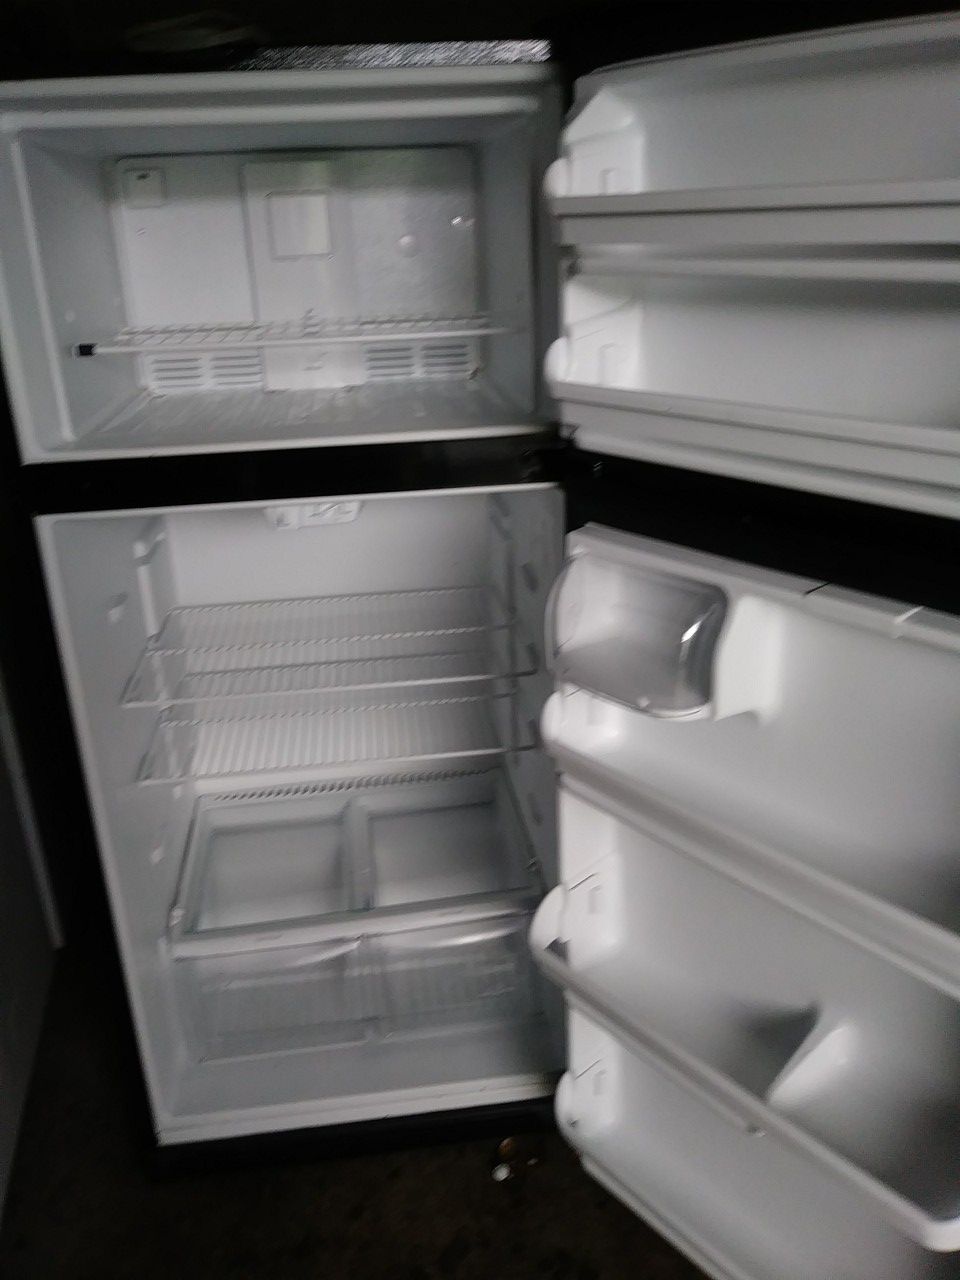 Deluxe refrigerator